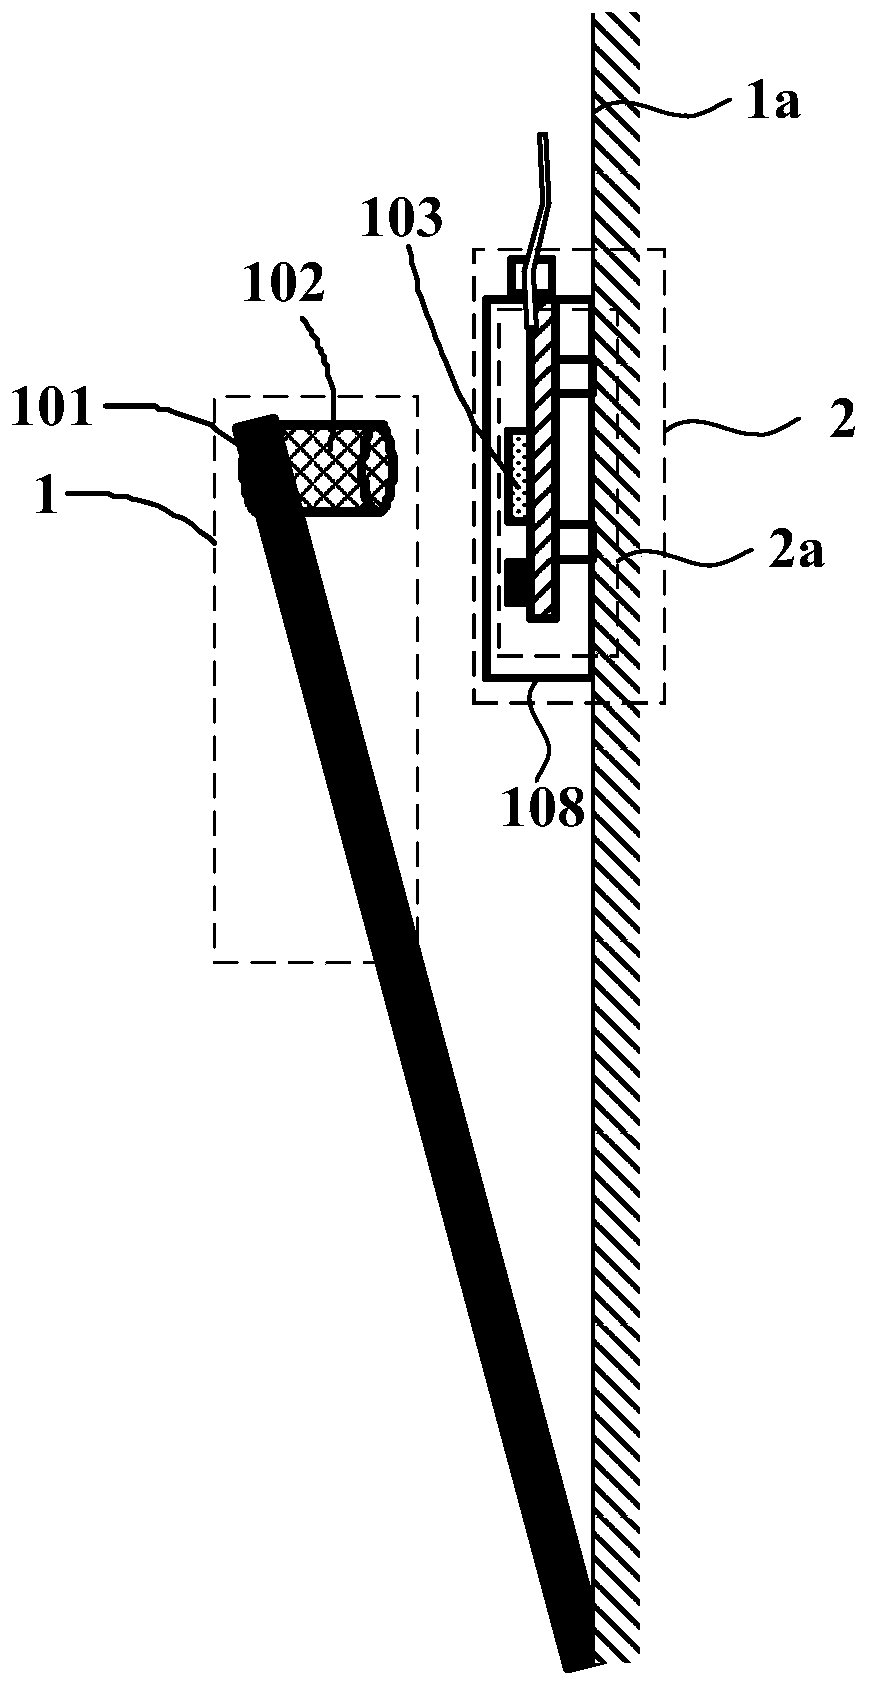 Magnetic-induction level gauge